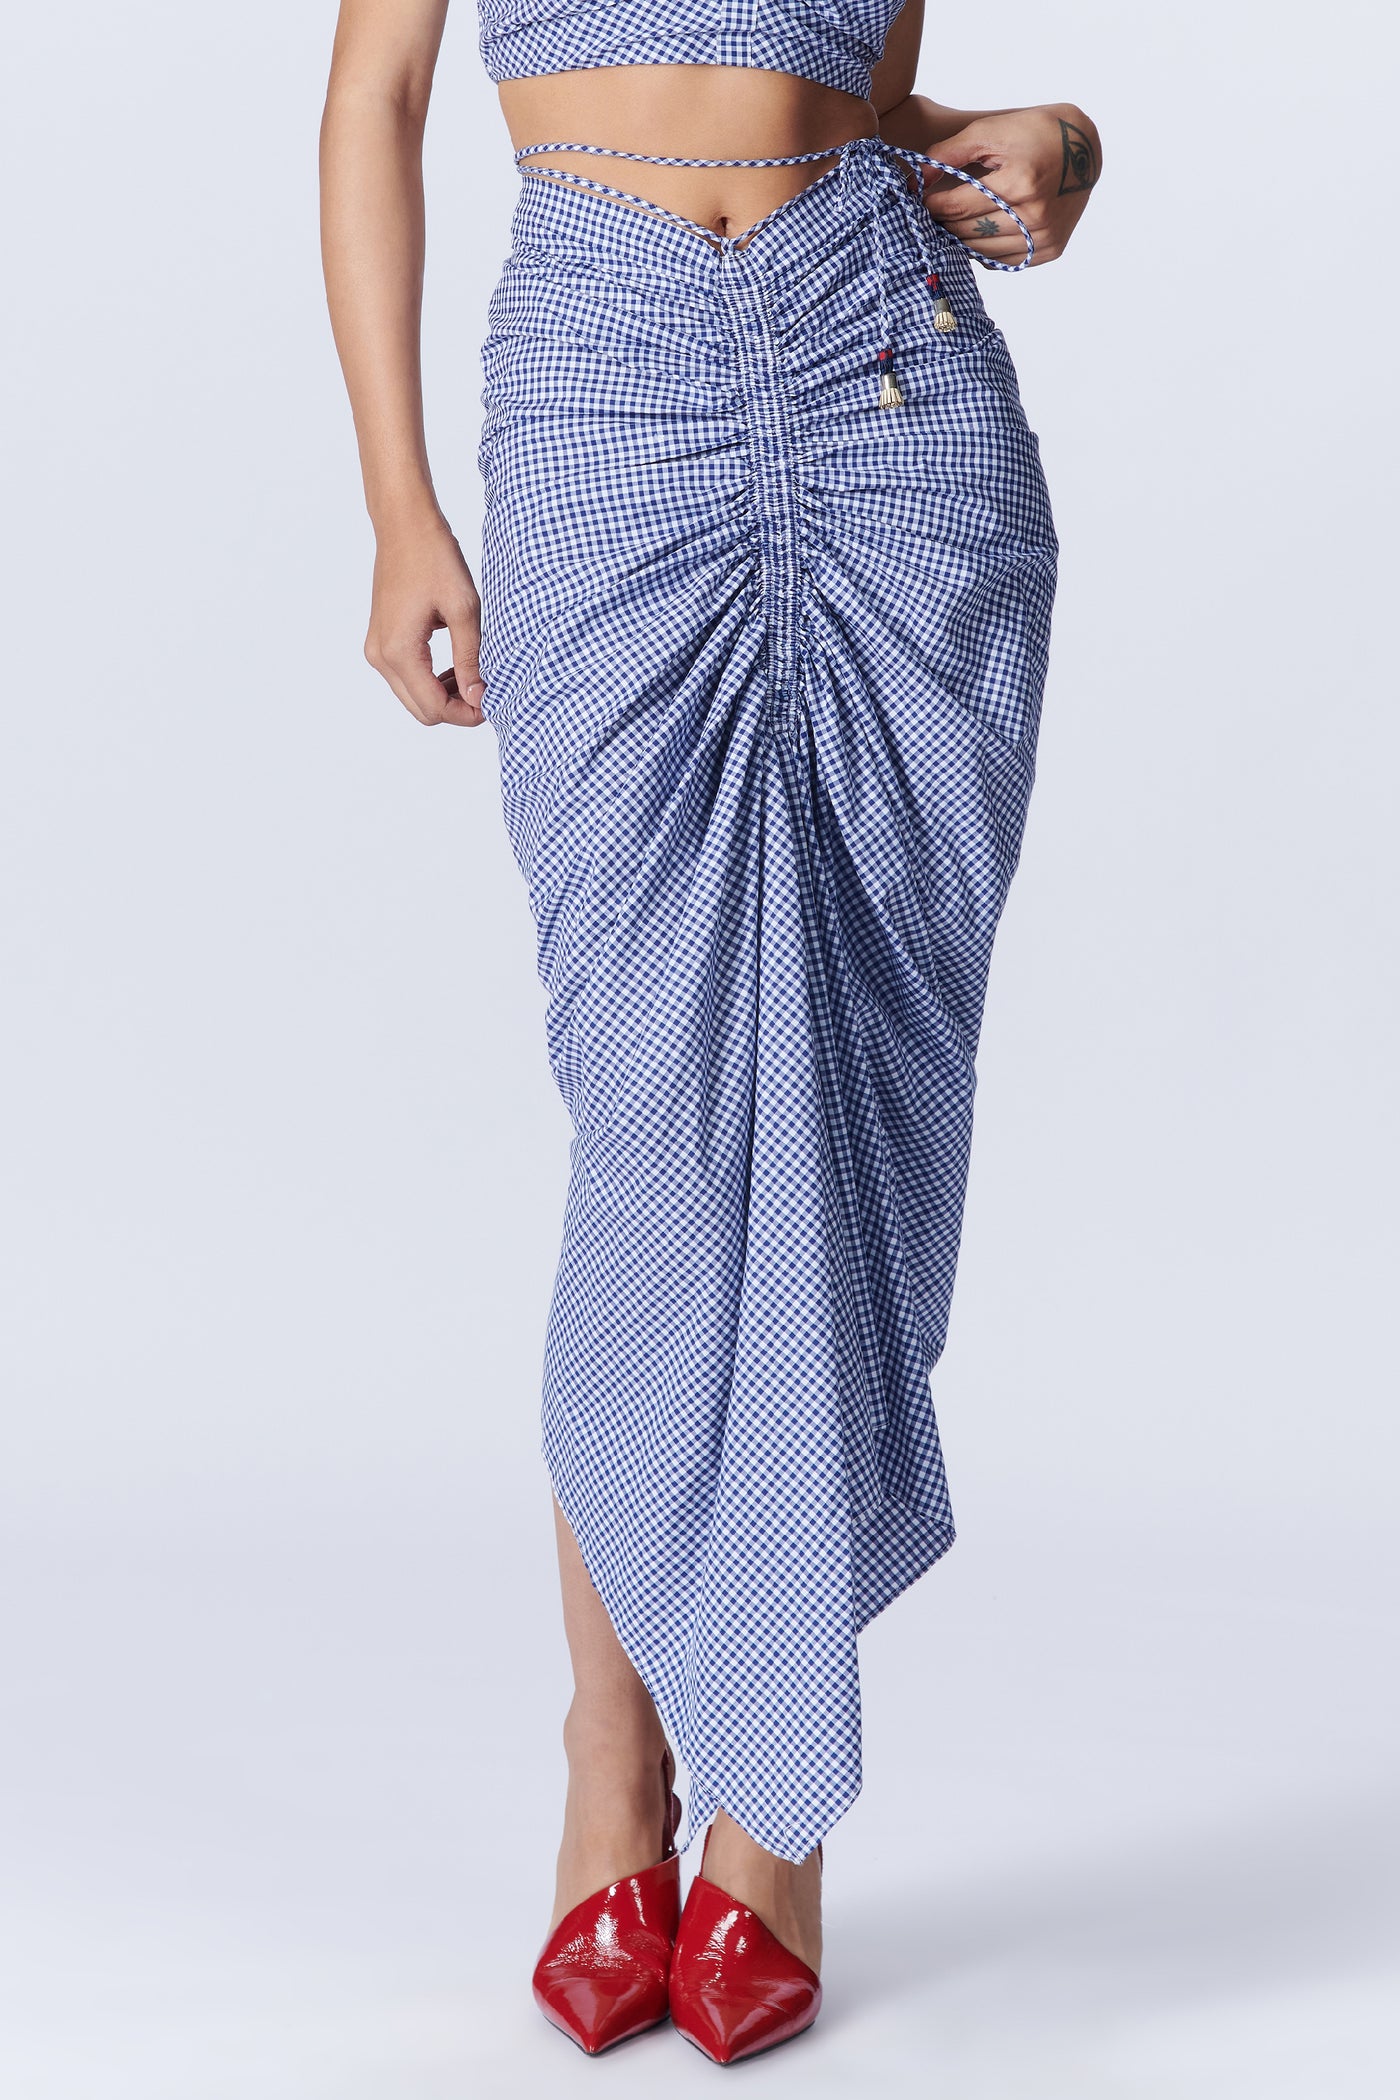 SN By Shantanu Nikhil SNCC Plaid Drape Skirt indian designer wear online shopping melange singapore